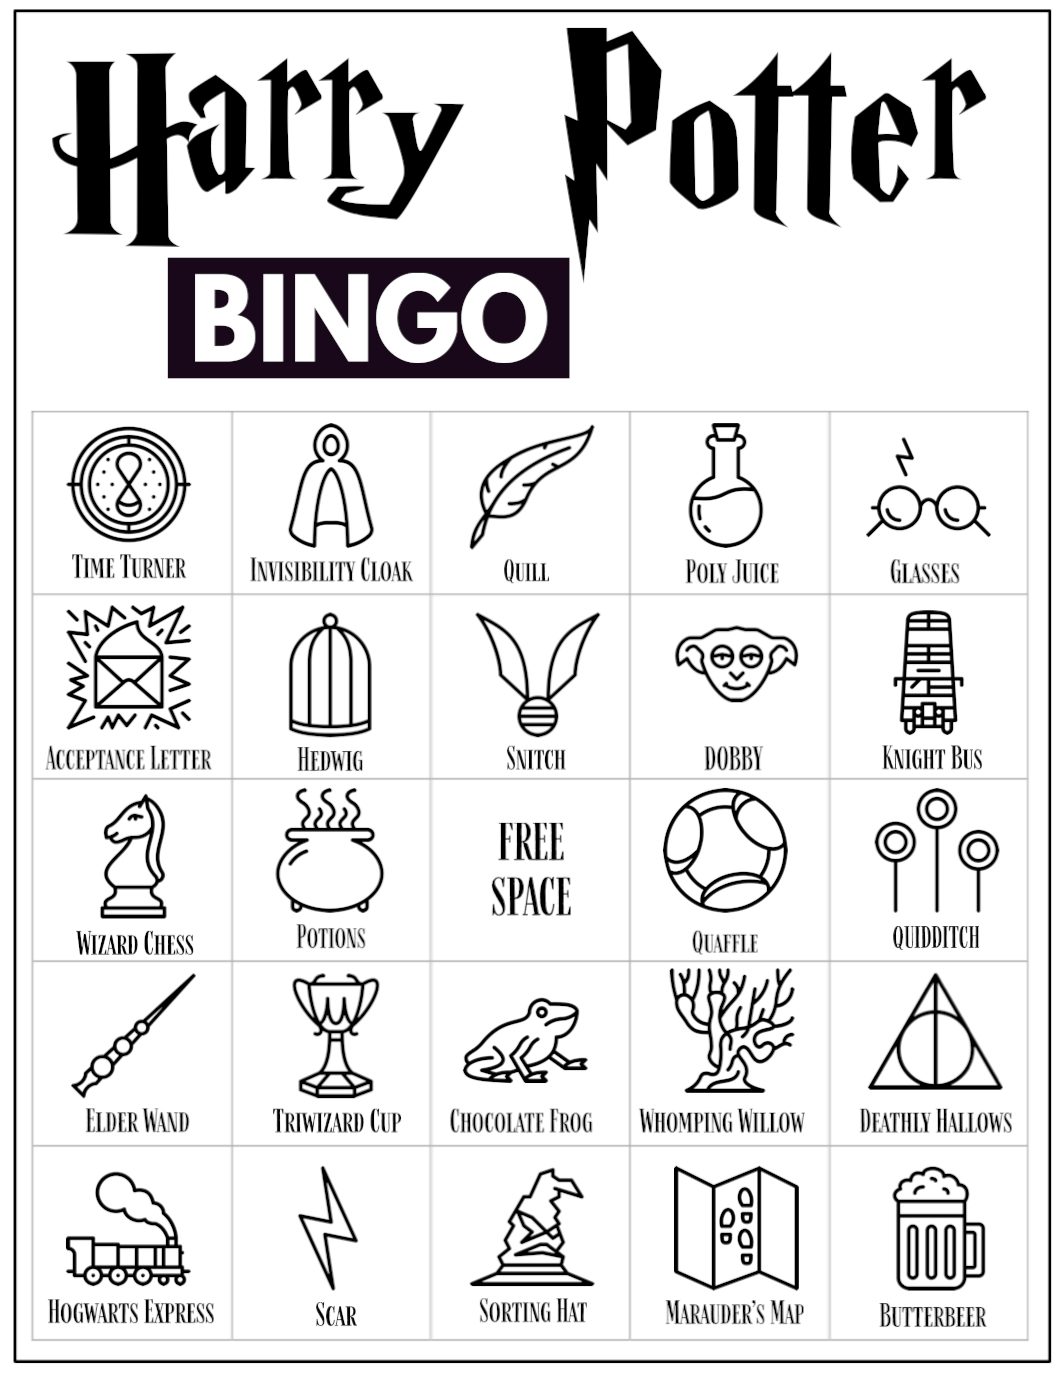 Harry potter house bingo template